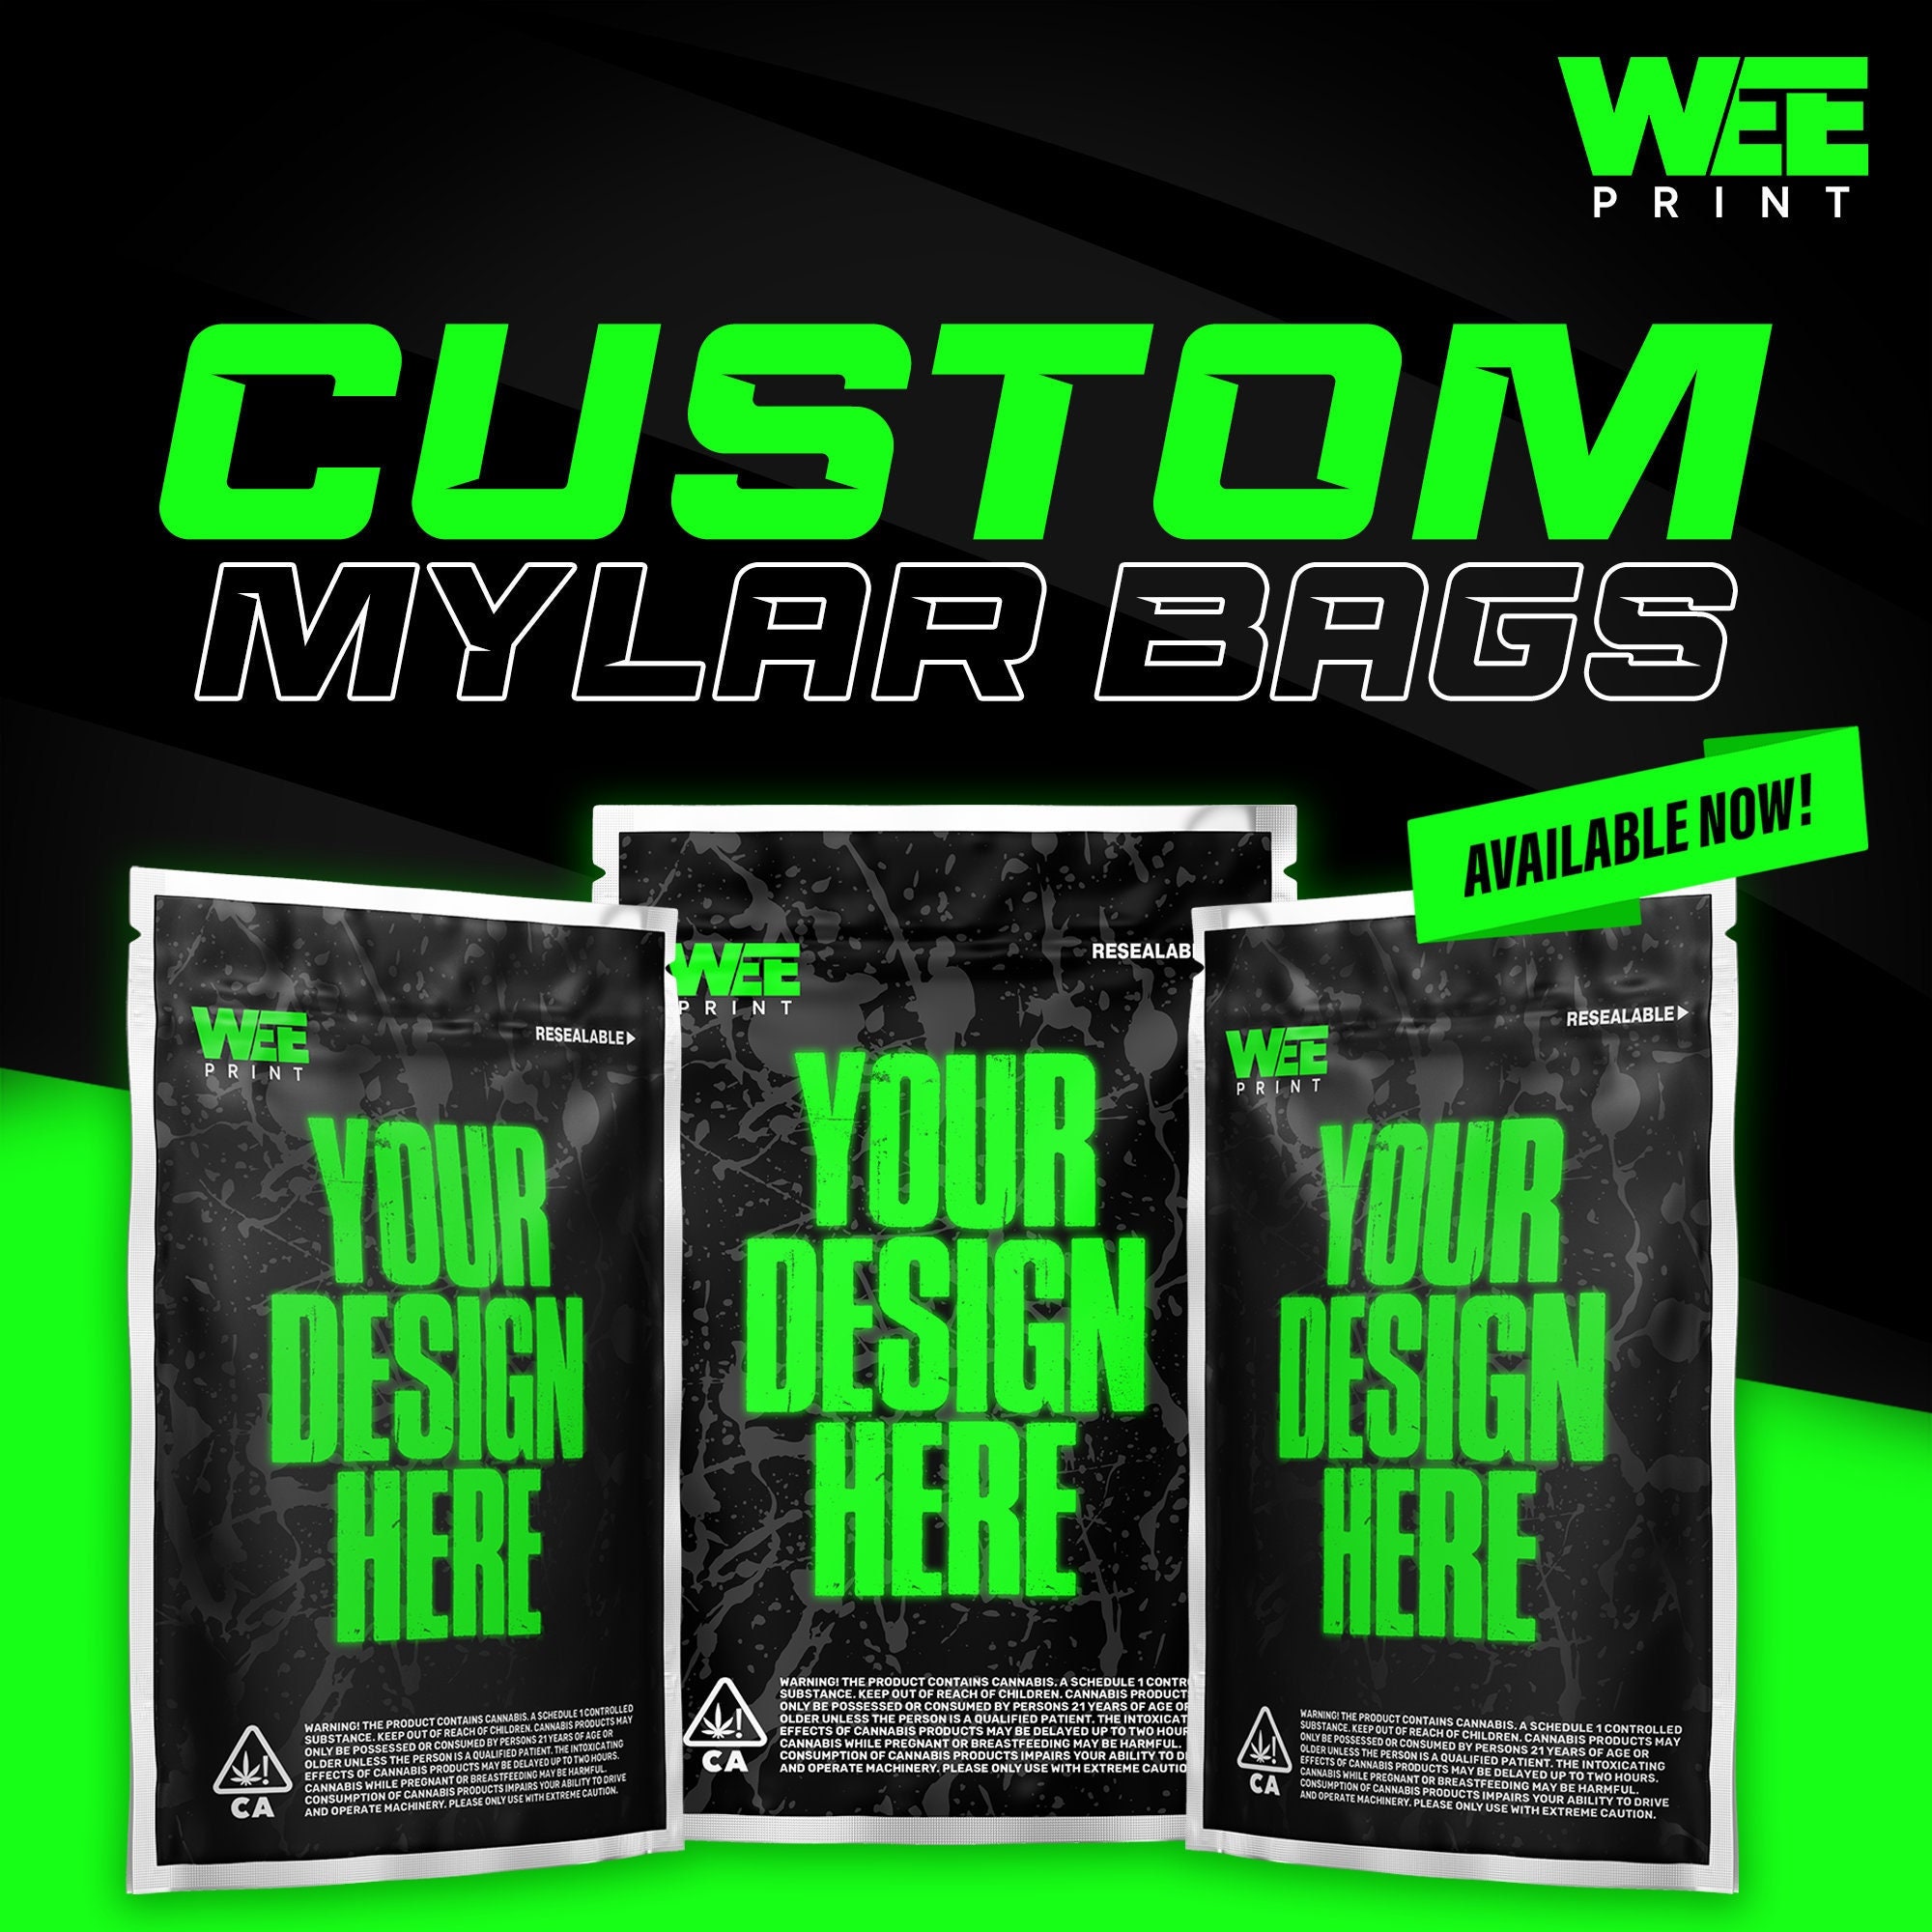 Mylar Bag 3.5g Cookies Mylar Bags All Flavors, Custom Printing Service